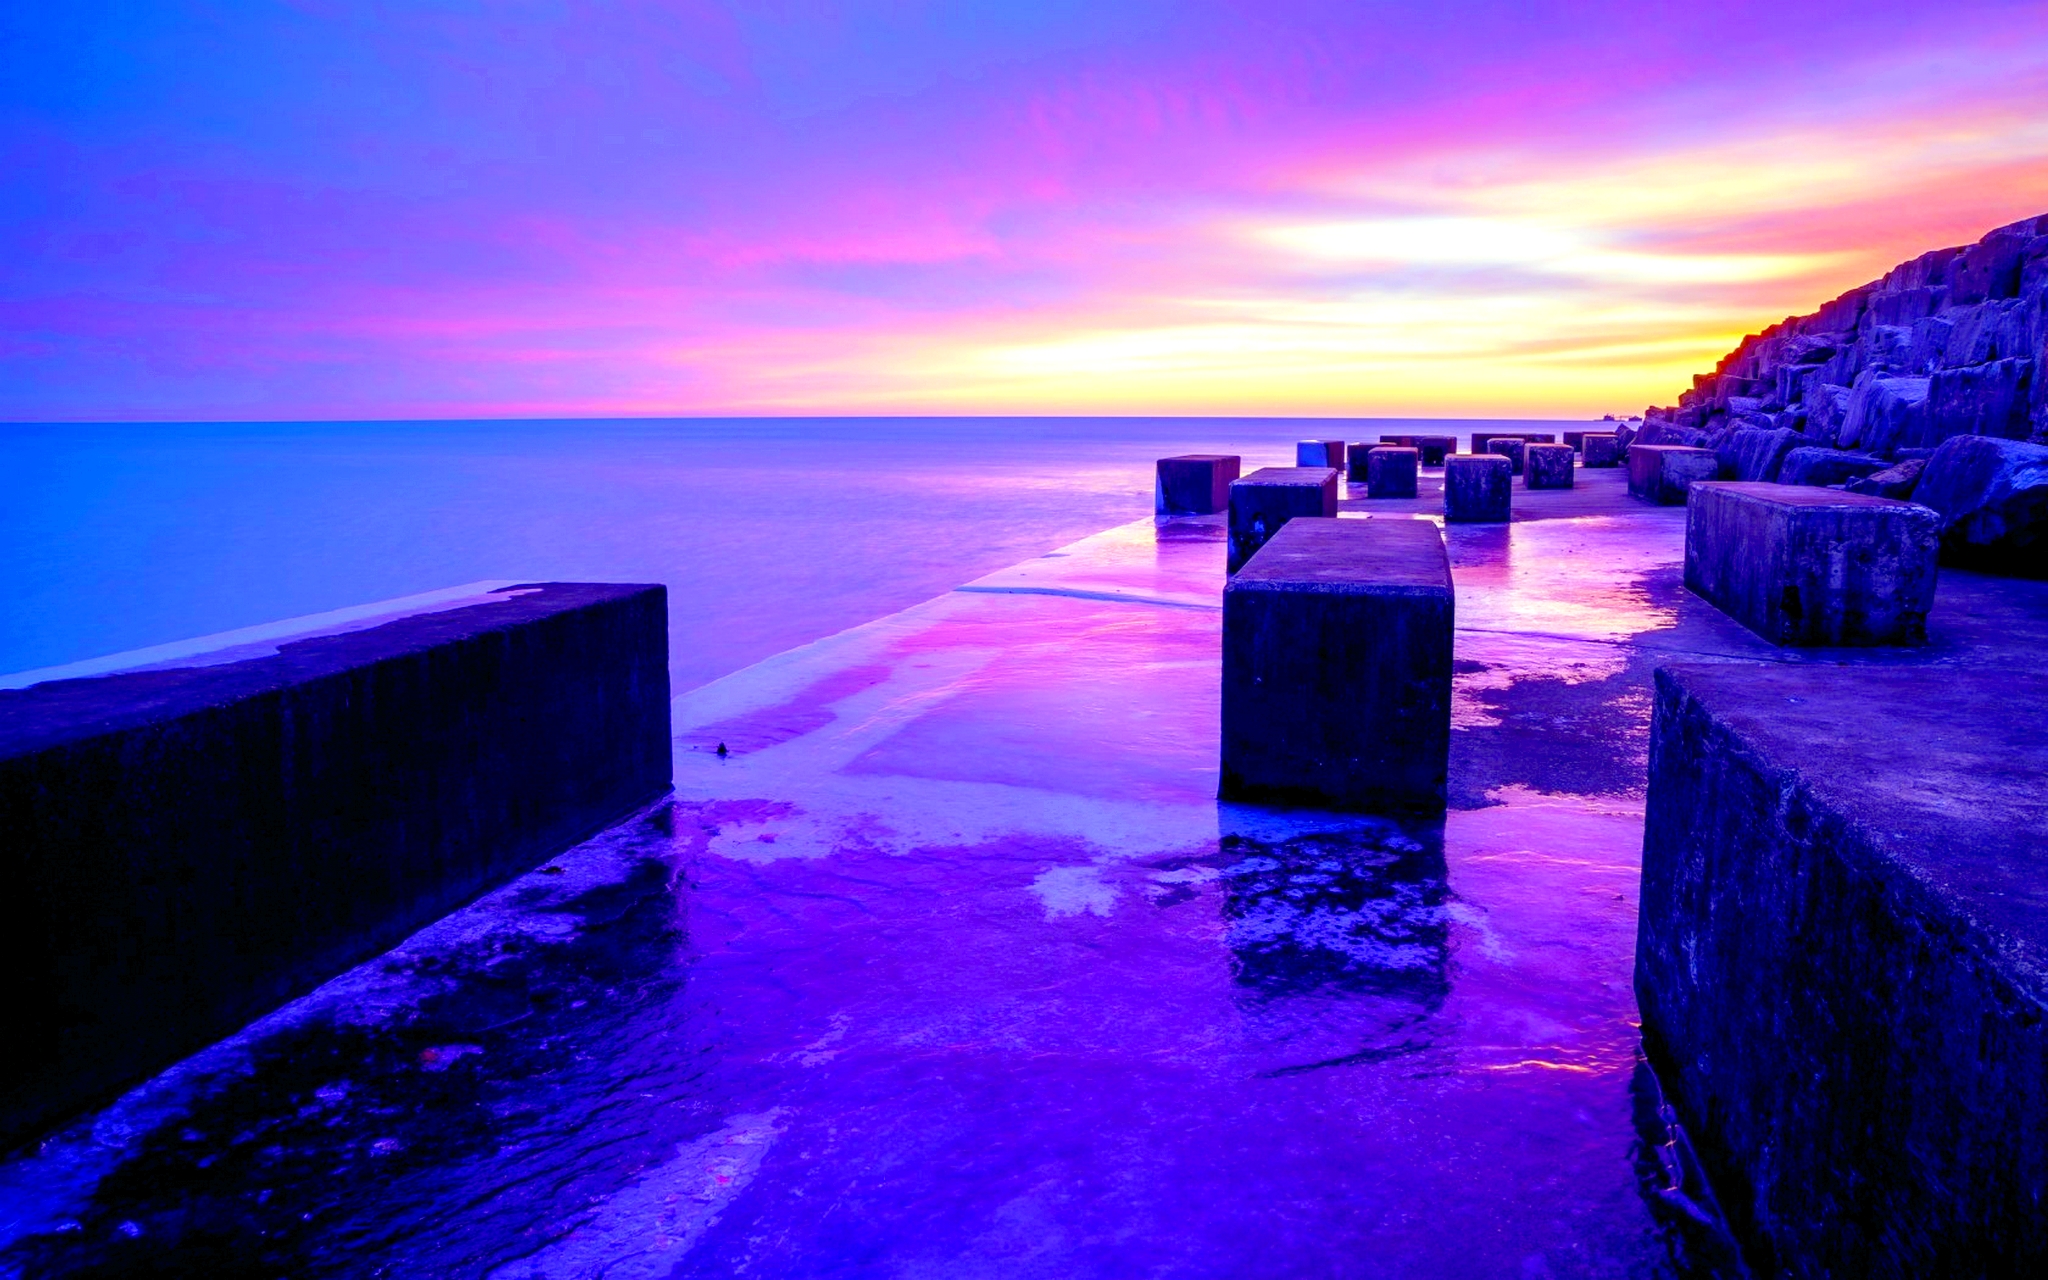 Purple Sunset Beach Wallpapers